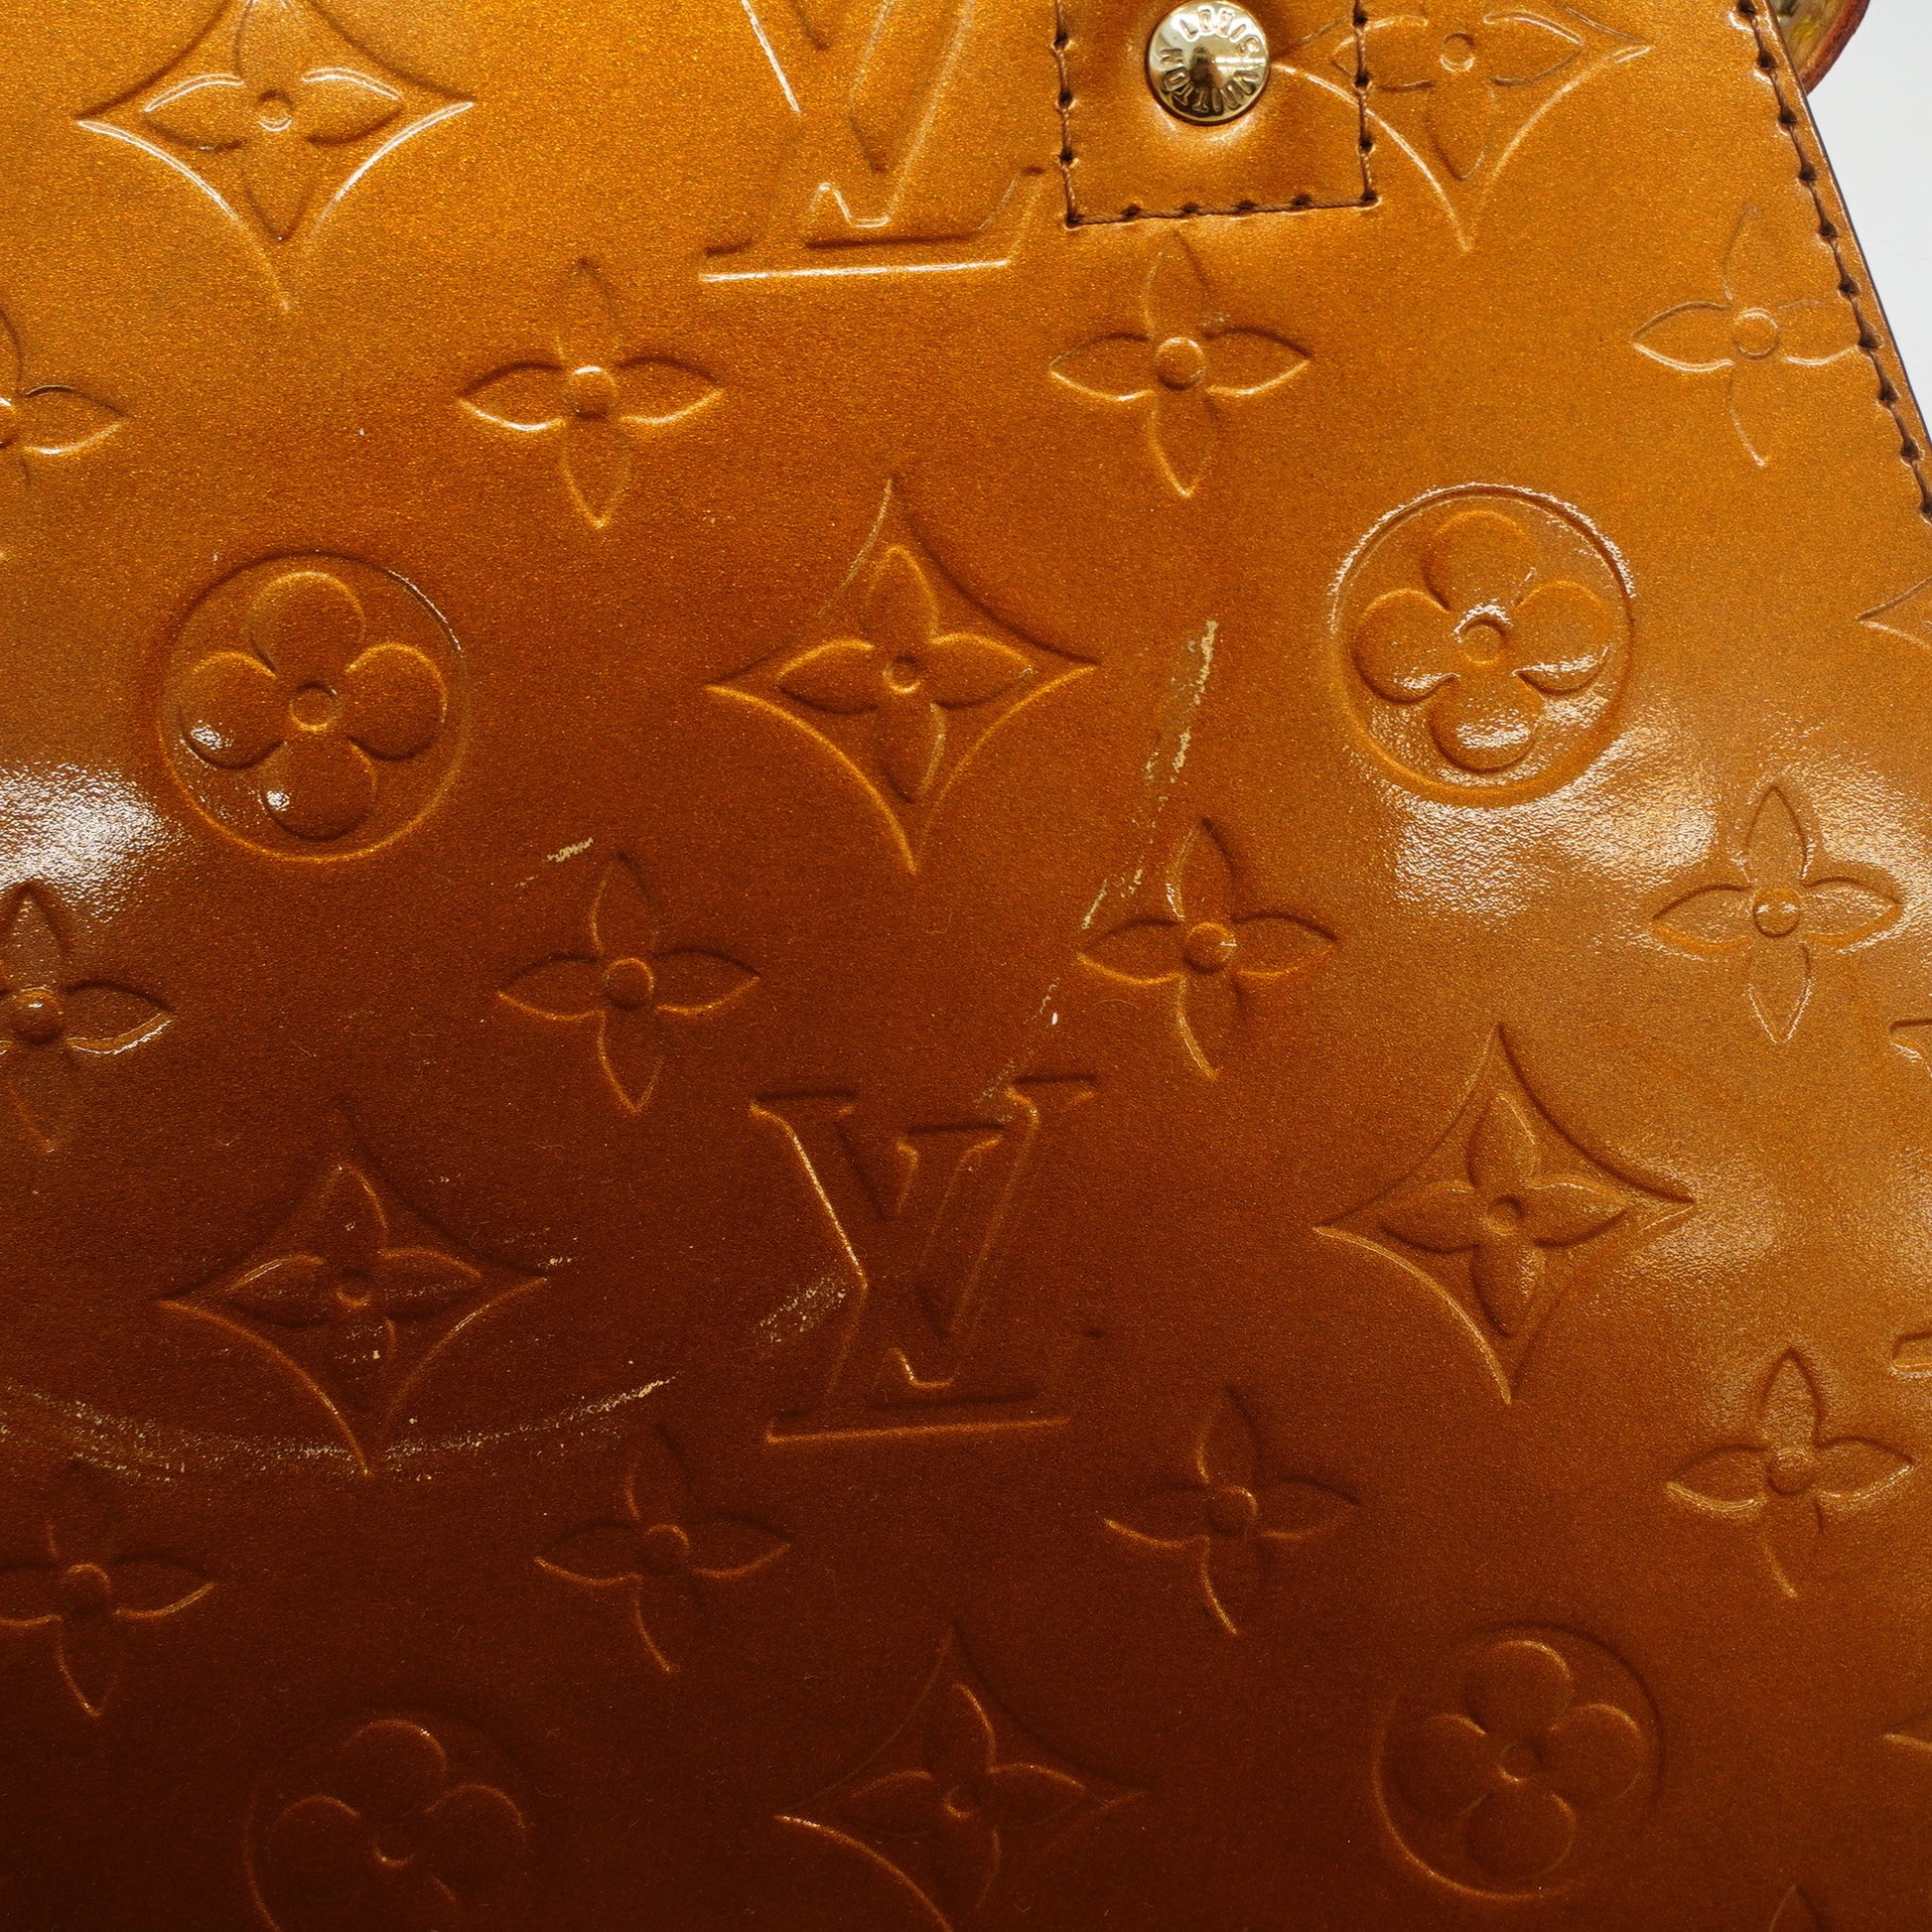 LOUIS VUITTON Monogram Vernis Bronze Forsyth PM Bag